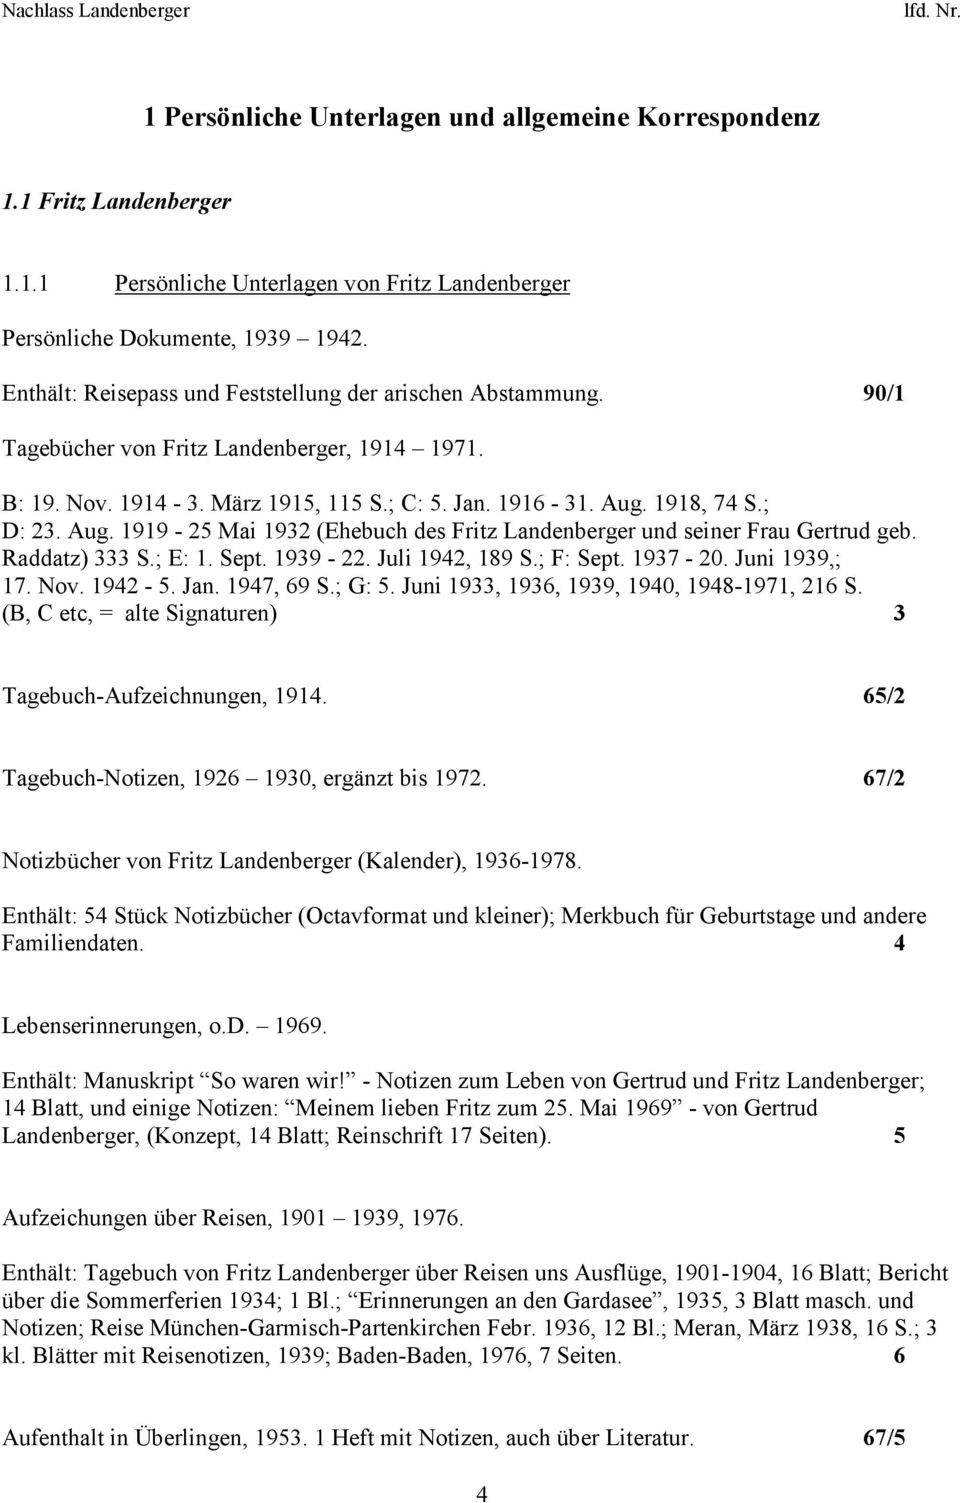 1918, 74 S.; D: 23. Aug. 1919-25 Mai 1932 (Ehebuch des Fritz Landenberger und seiner Frau Gertrud geb. Raddatz) 333 S.; E: 1. Sept. 1939-22. Juli 1942, 189 S.; F: Sept. 1937-20. Juni 1939,; 17. Nov.